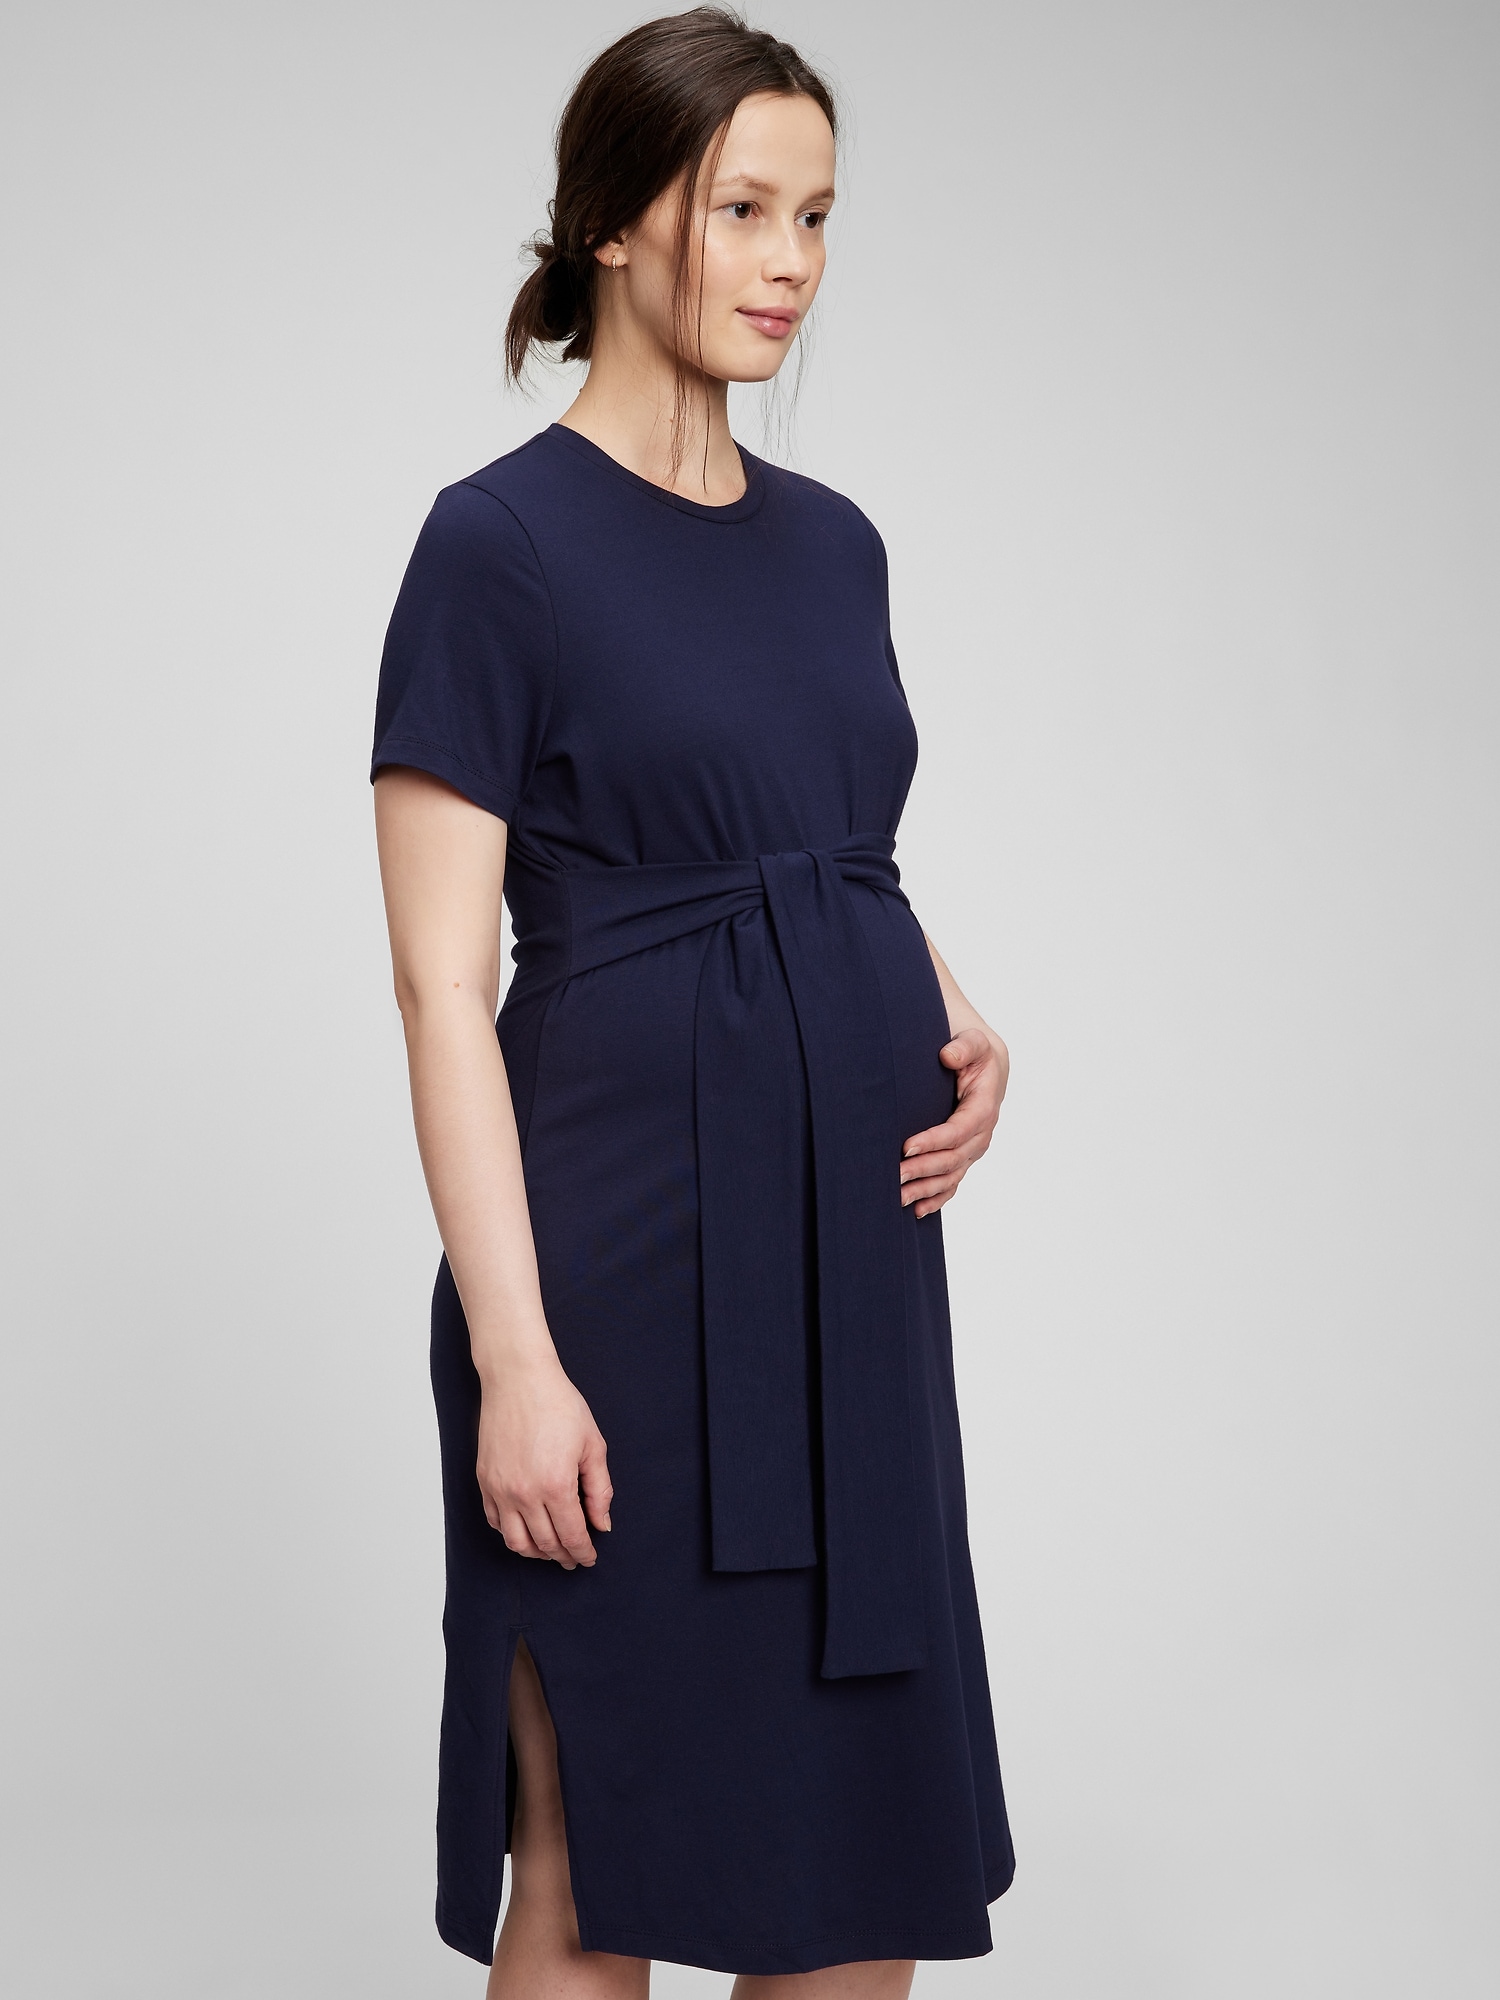 Gap Maternity Tie-Belt Dress